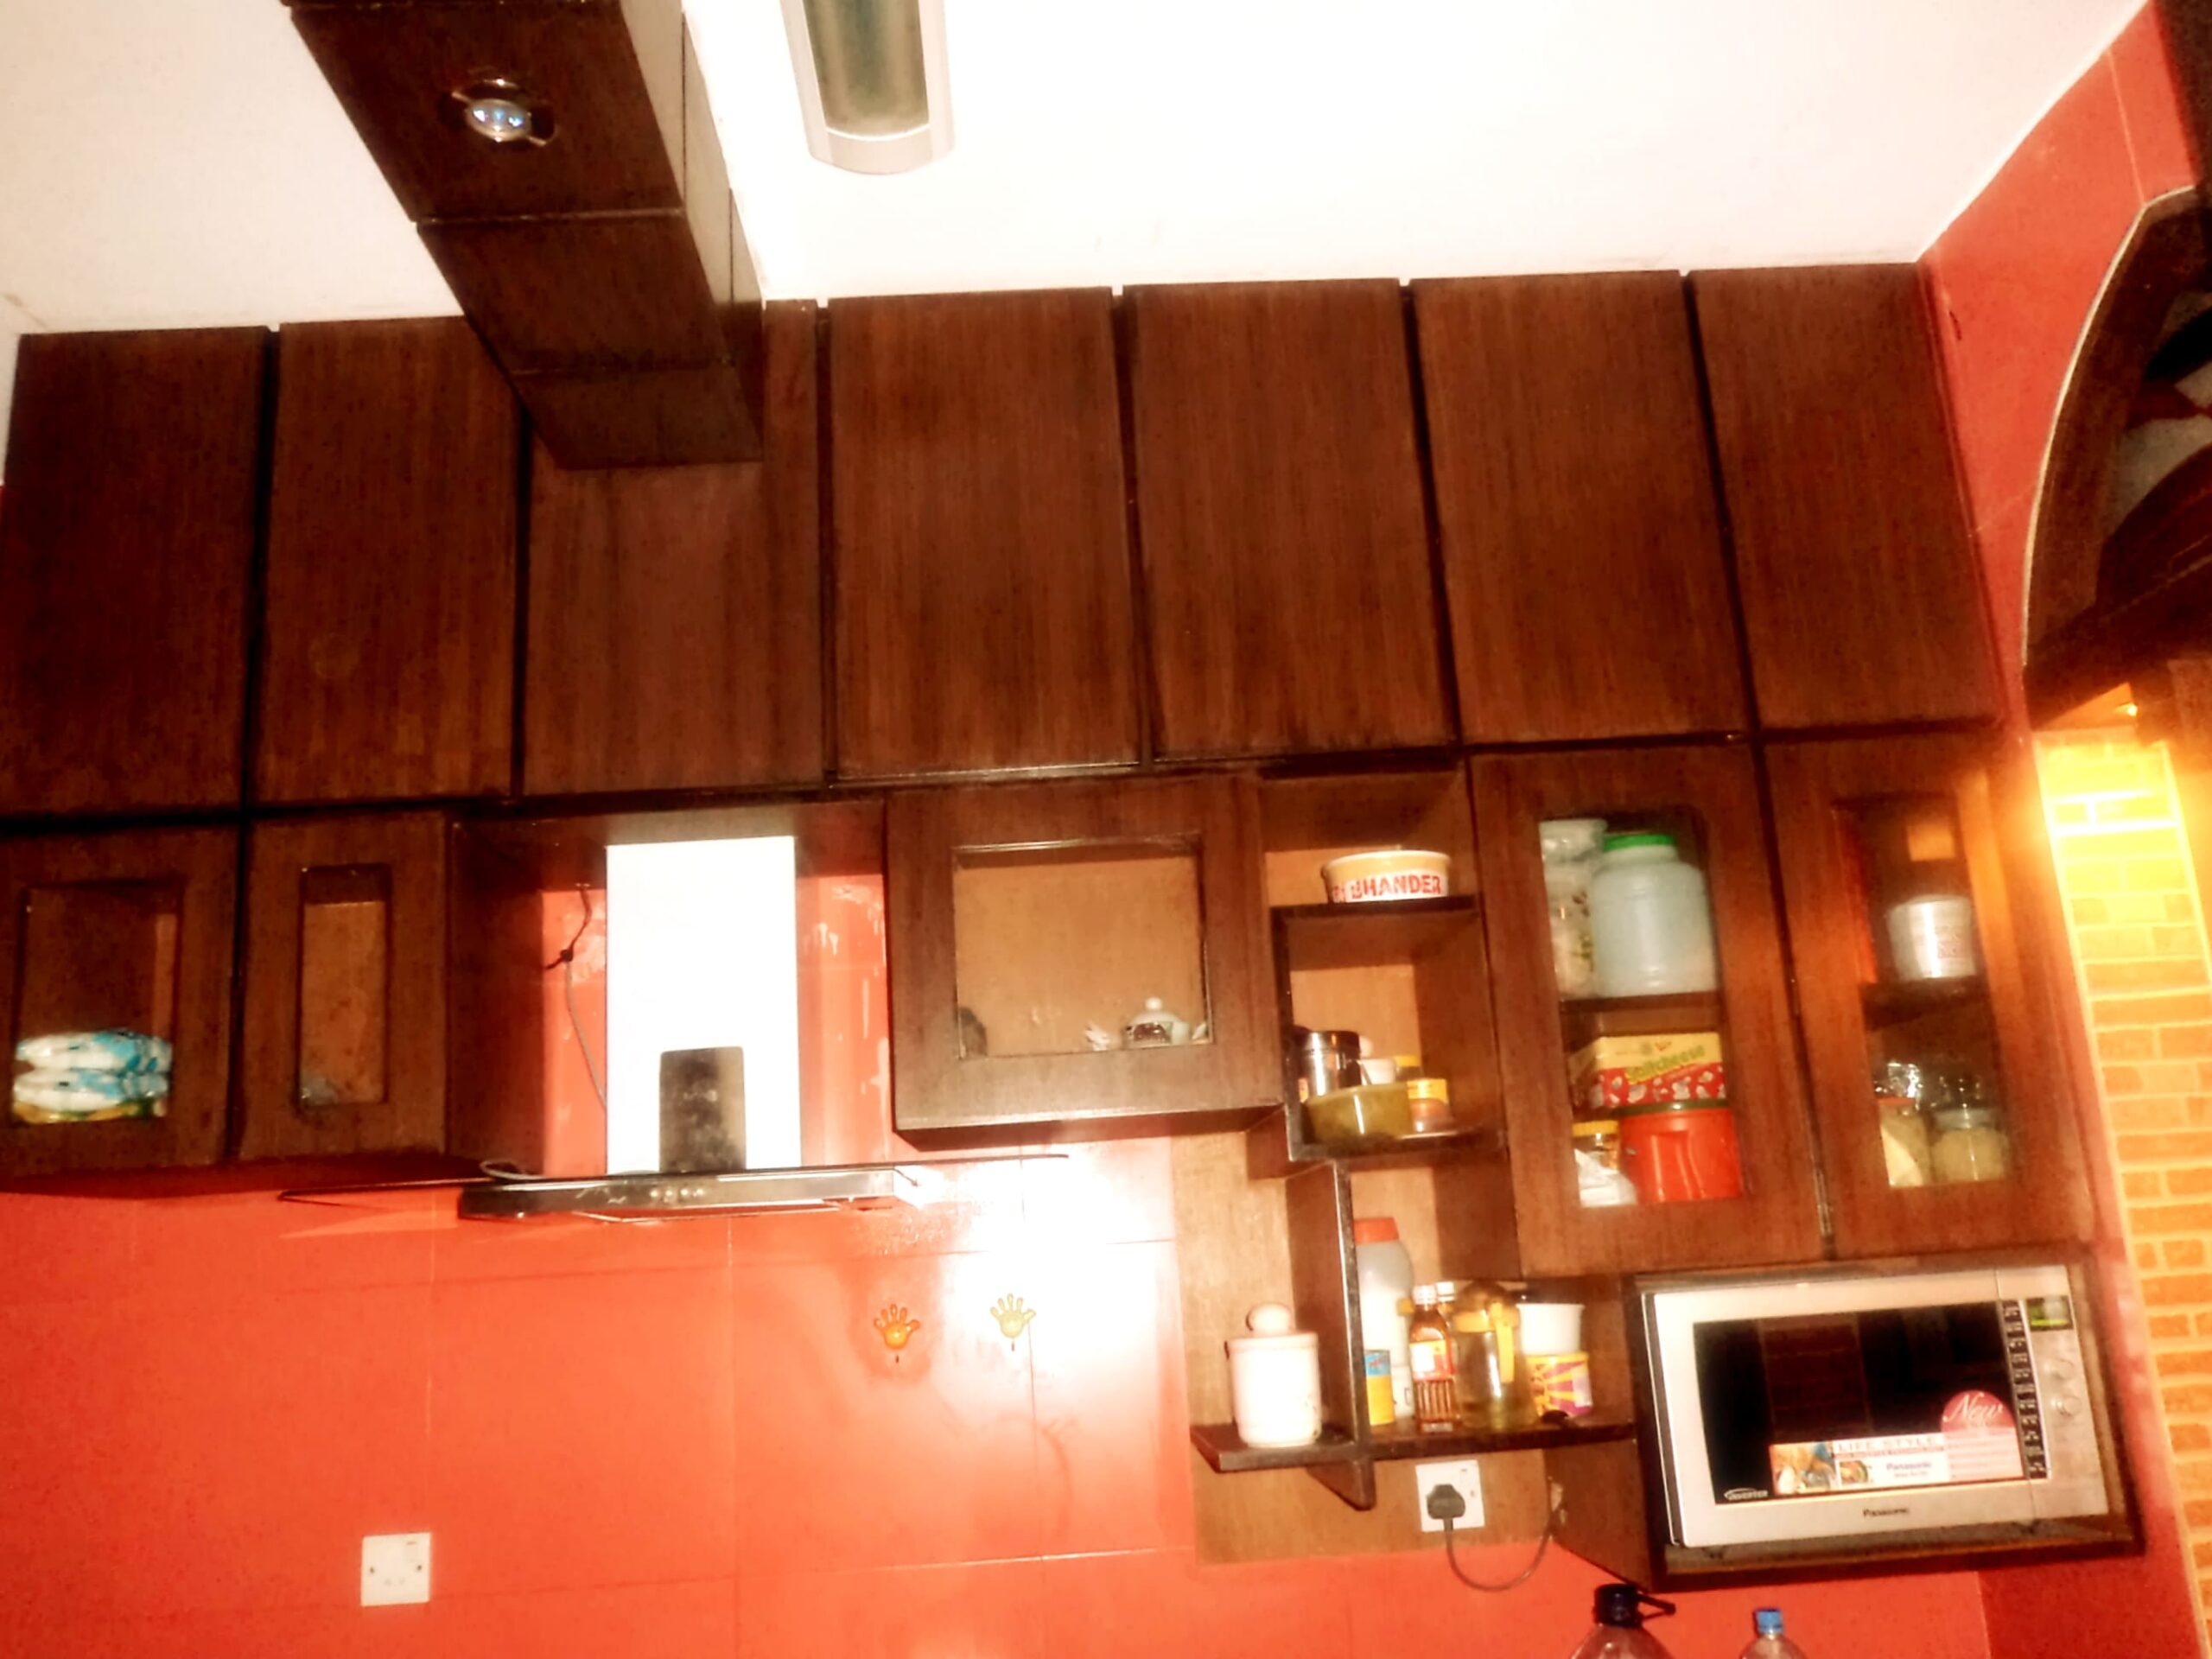 Rabeya Dhanmondi Complete Project Kitchen Interior Design (12)